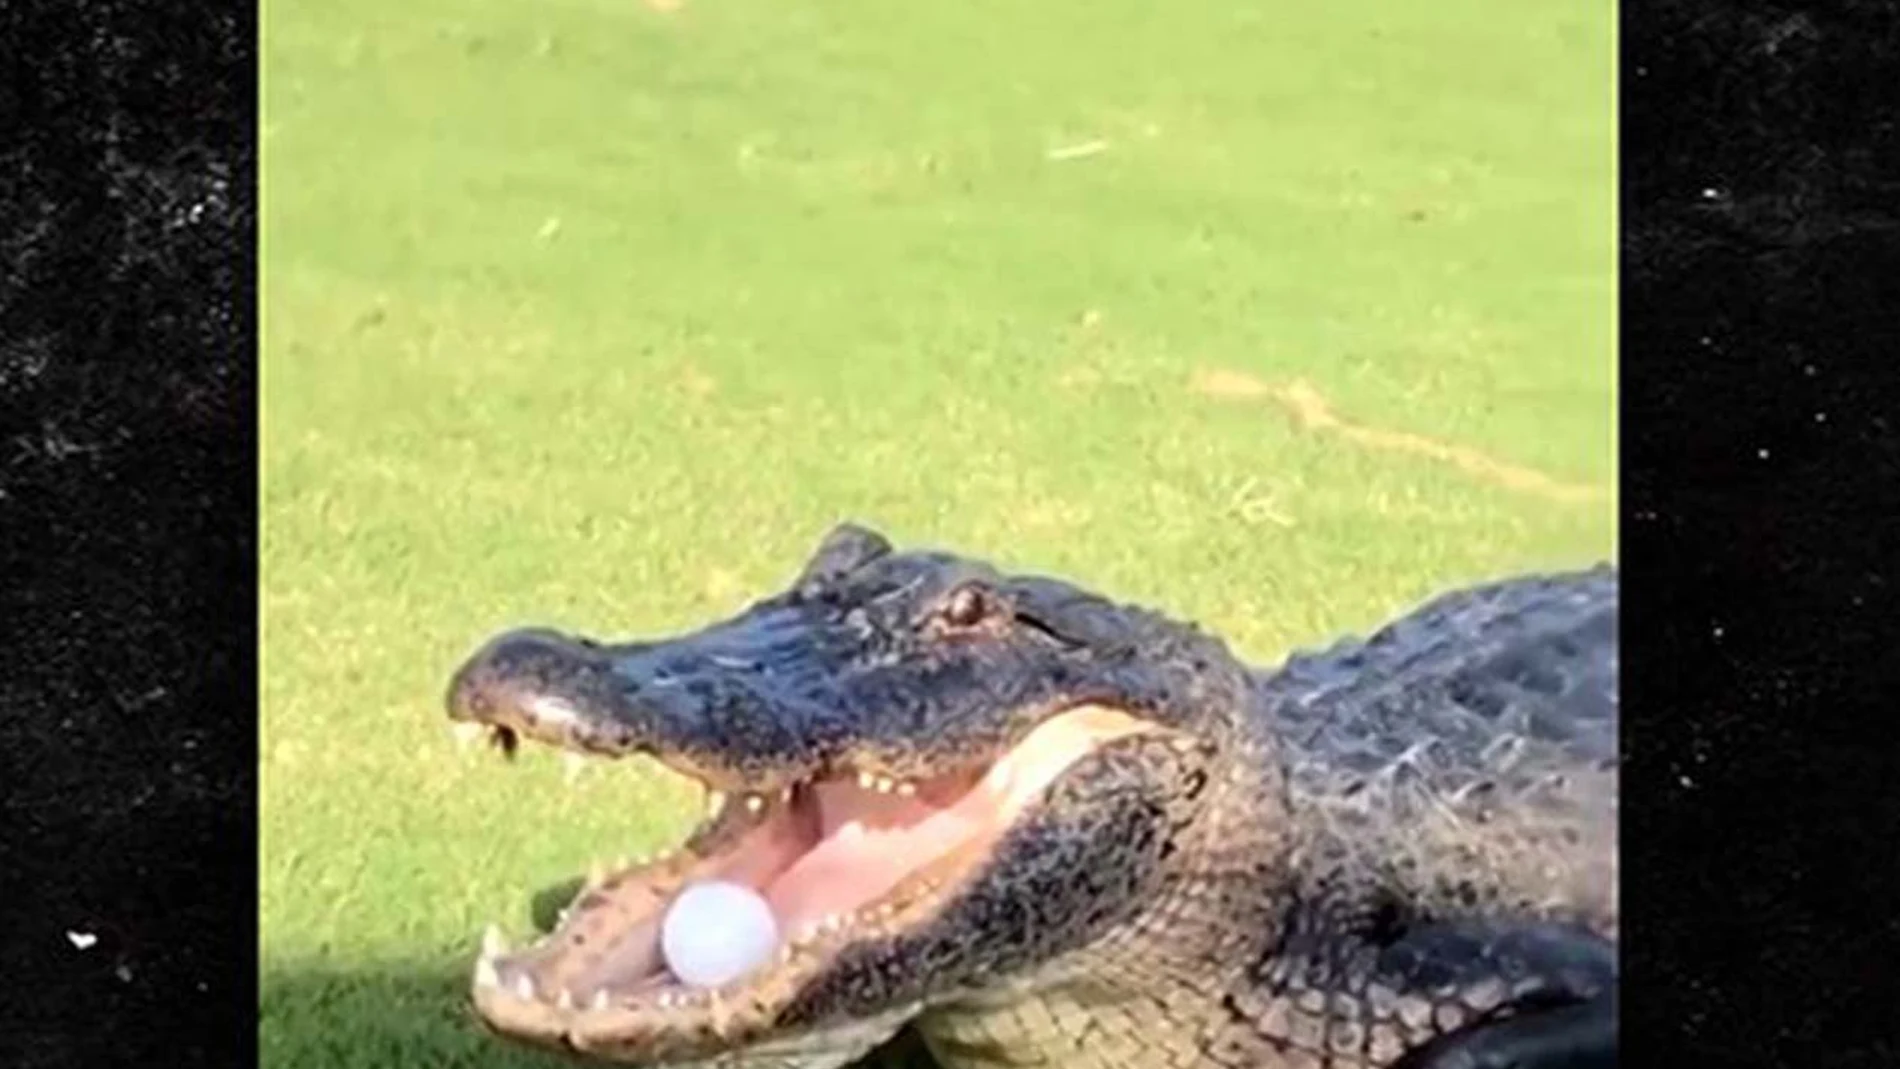 La pelota de golf, dentro de la boca del cocodrilo.